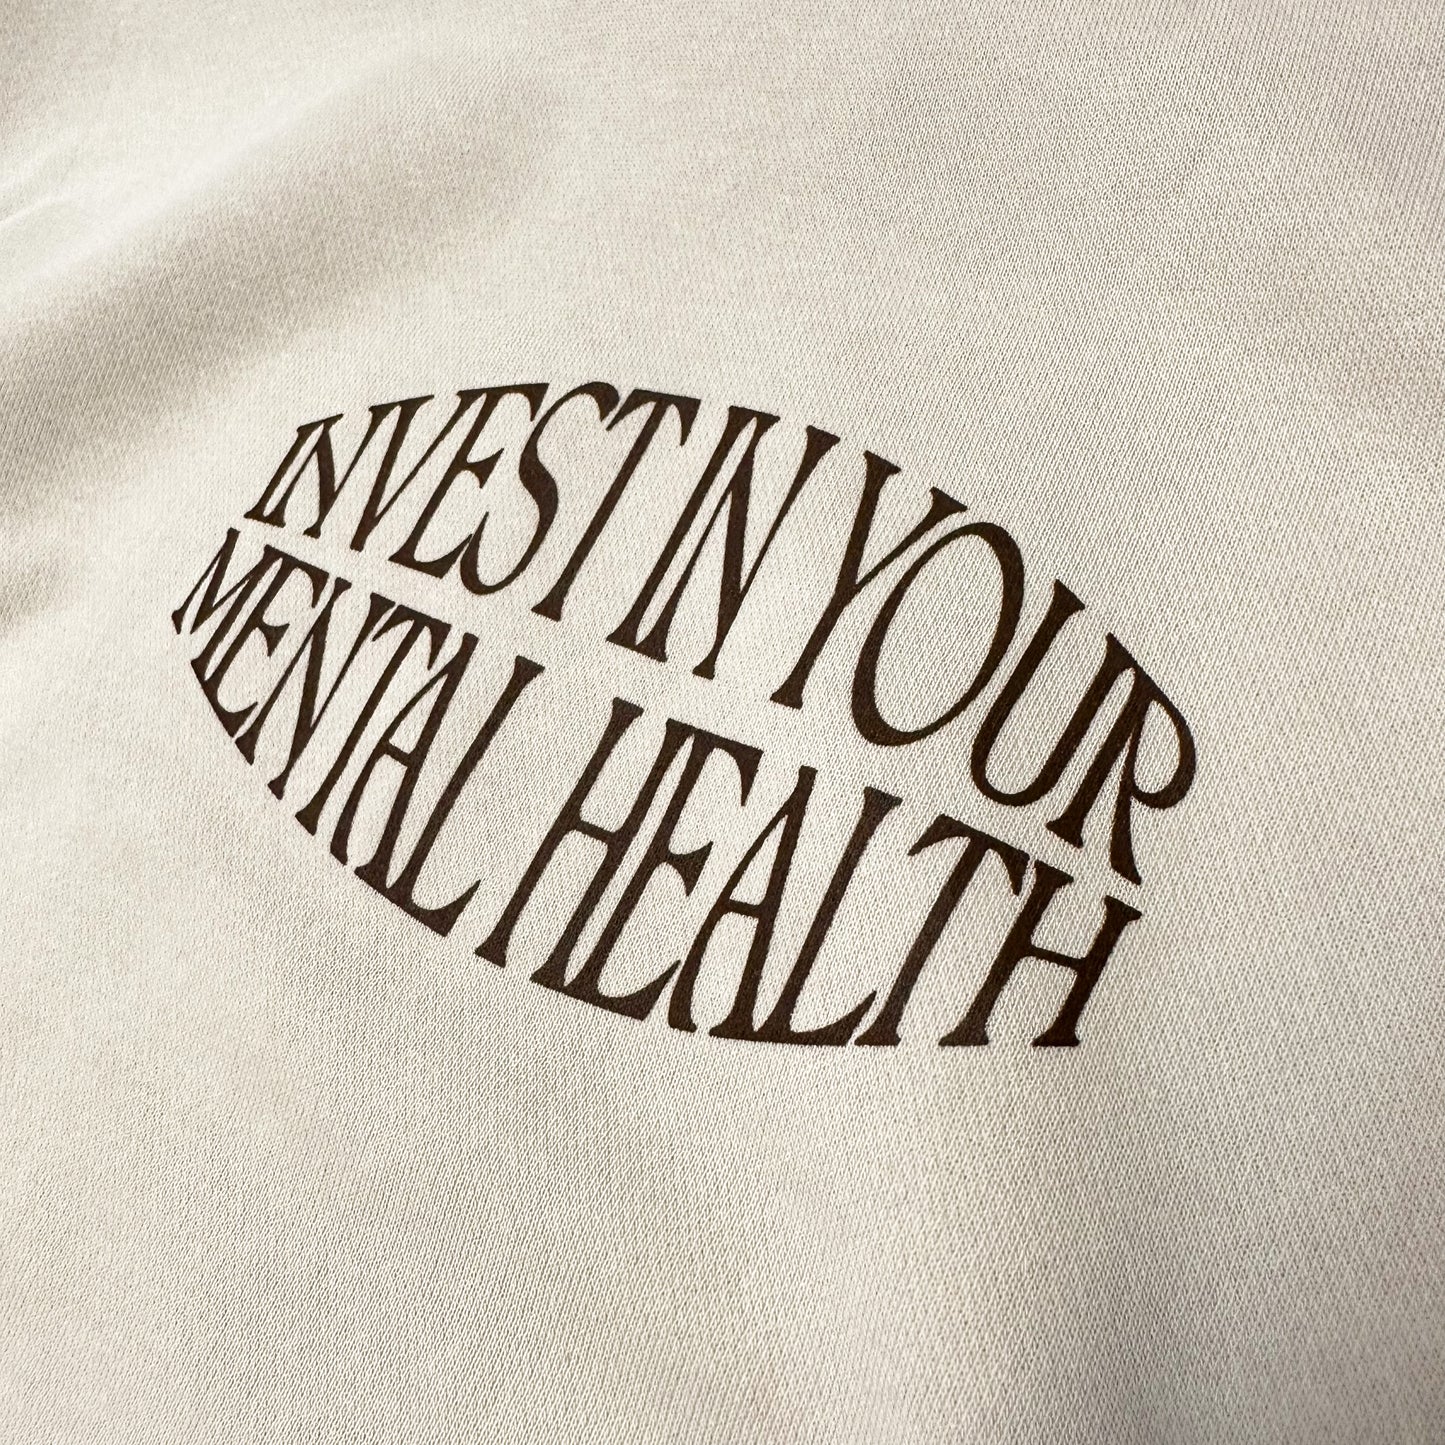 Invest in your mental health sweatshirt